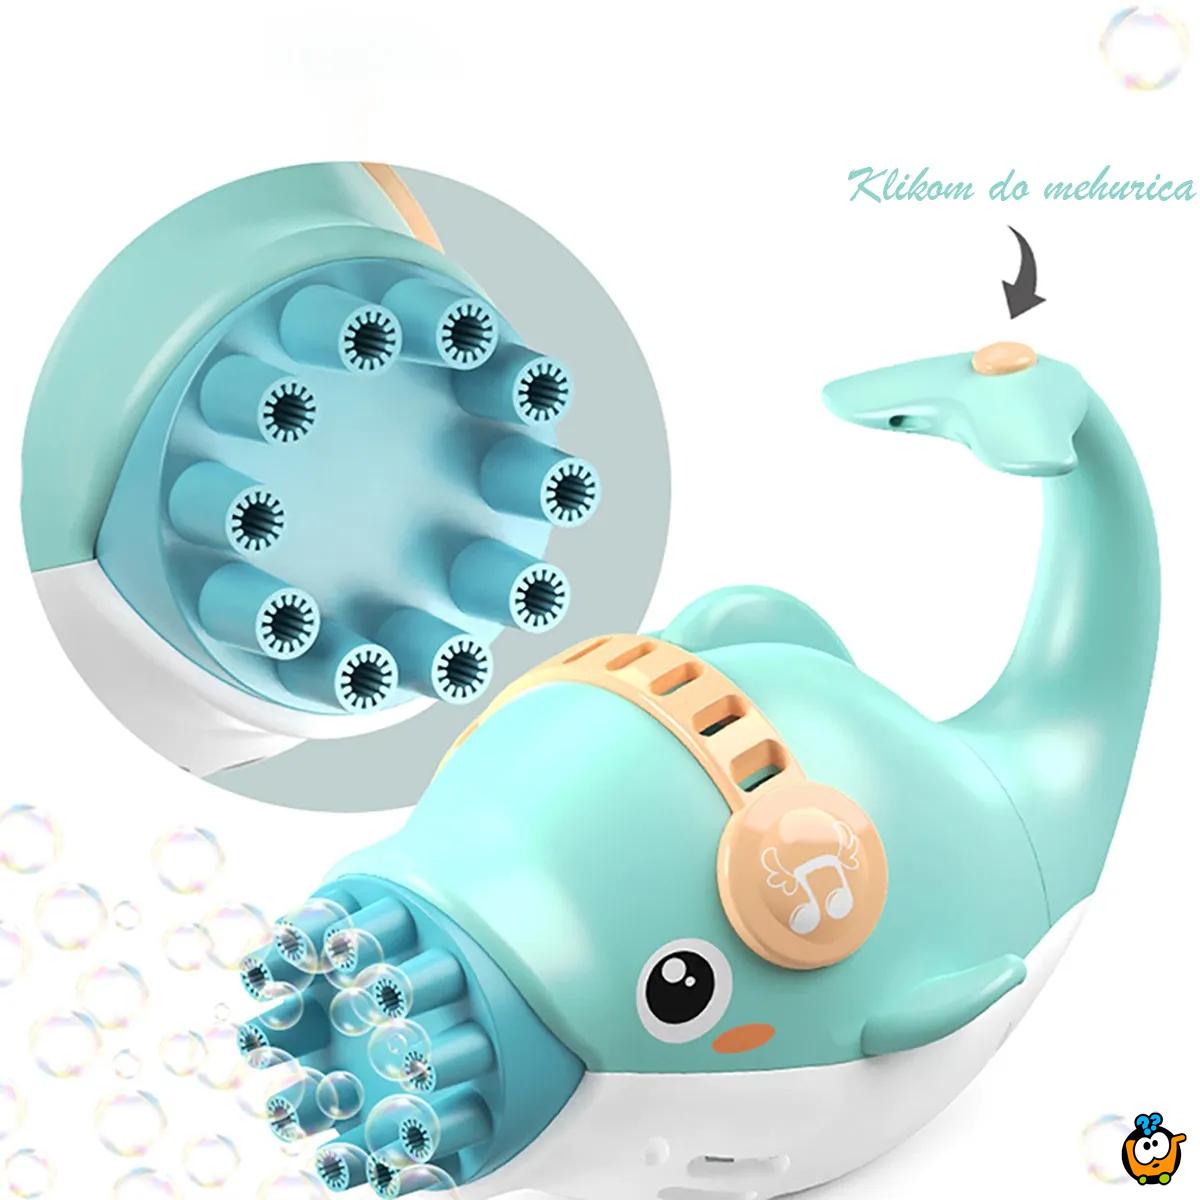 Bubble Dolphin - Delfin koji pravi mehuriće